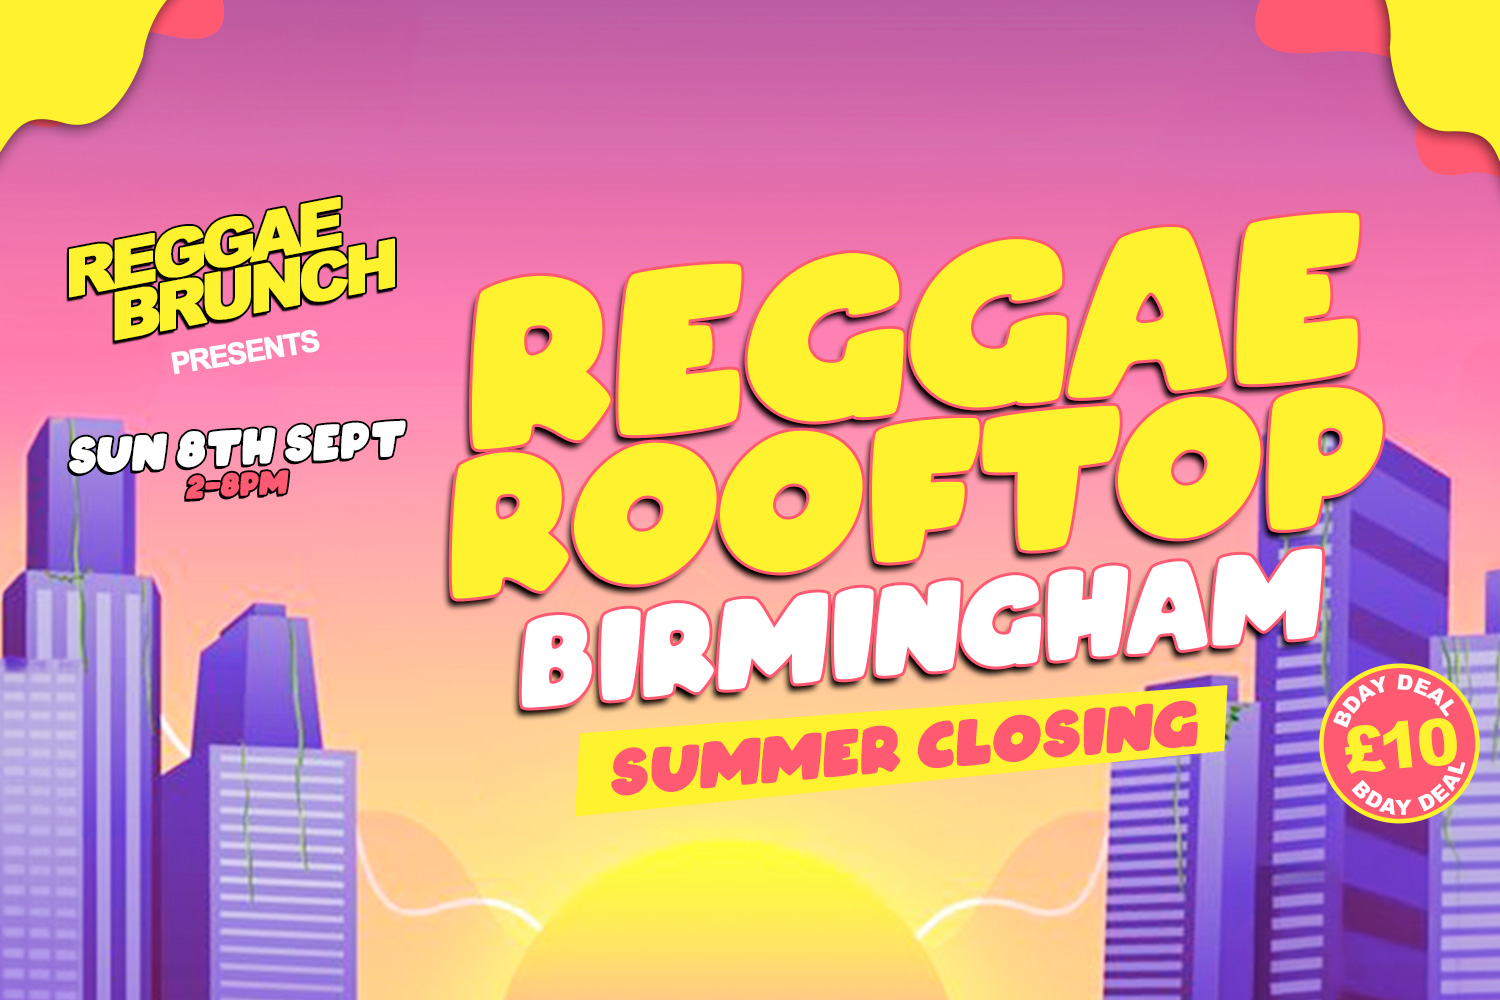 Sun, 8 Sept | Reggae Rooftop BHAM